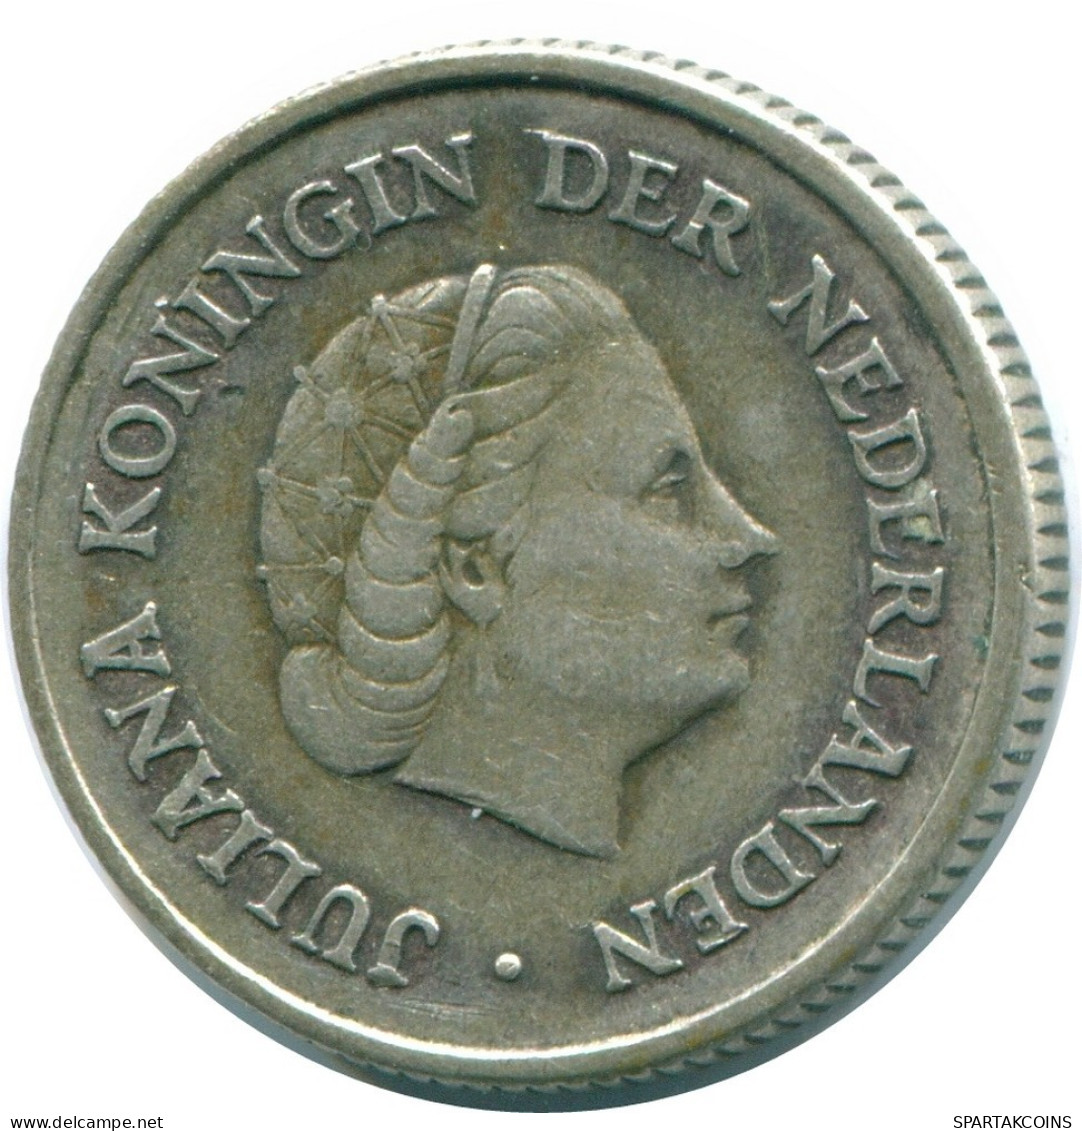 1/4 GULDEN 1963 NETHERLANDS ANTILLES SILVER Colonial Coin #NL11250.4.U.A - Netherlands Antilles